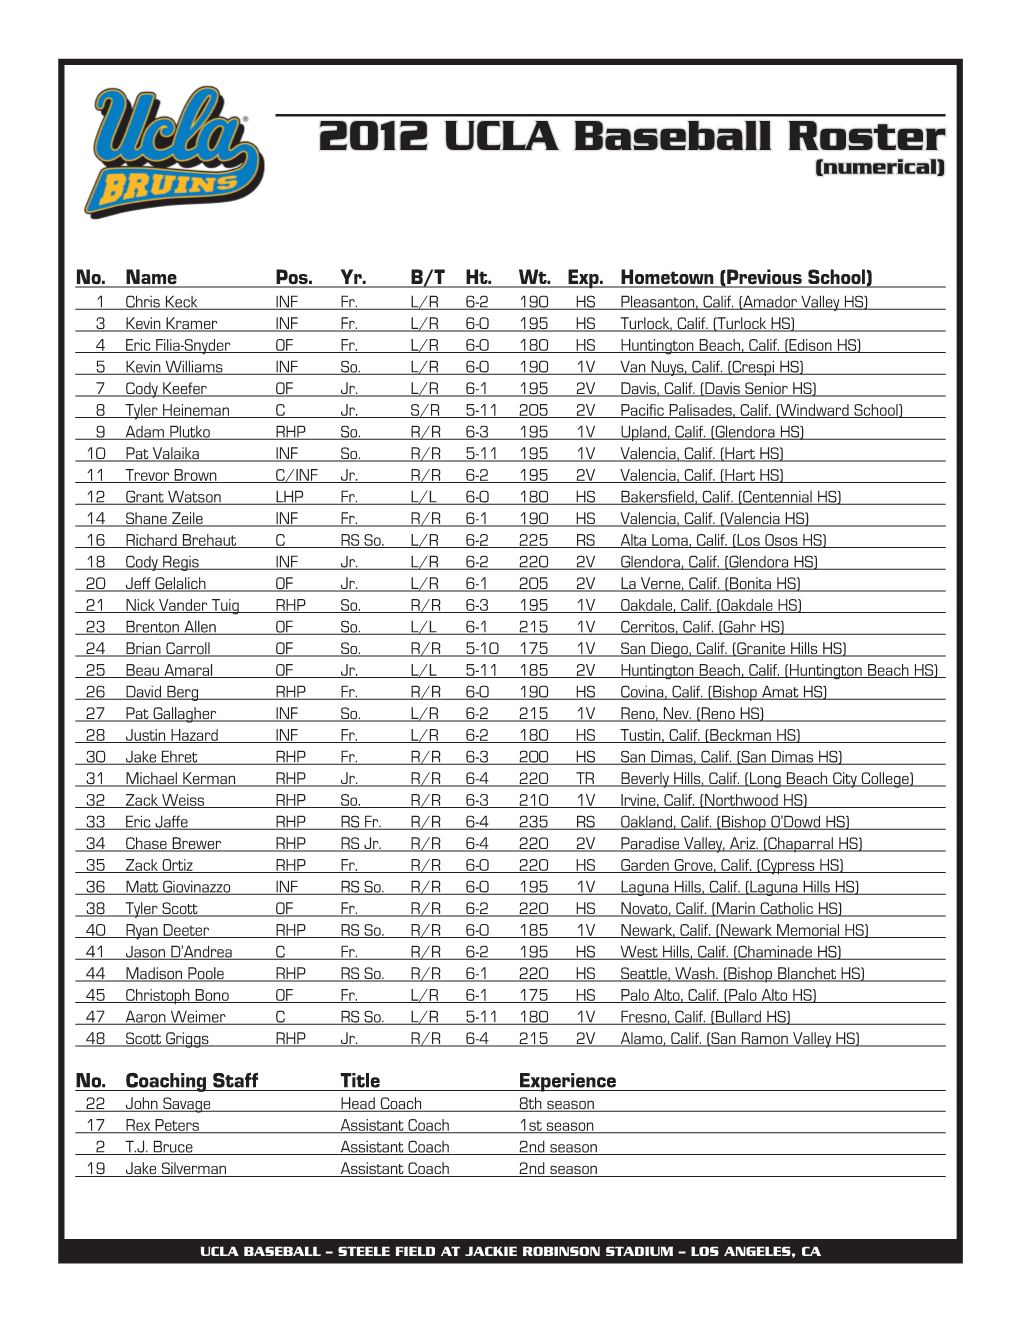 2012 UCLA Baseball Roster (Numerical)